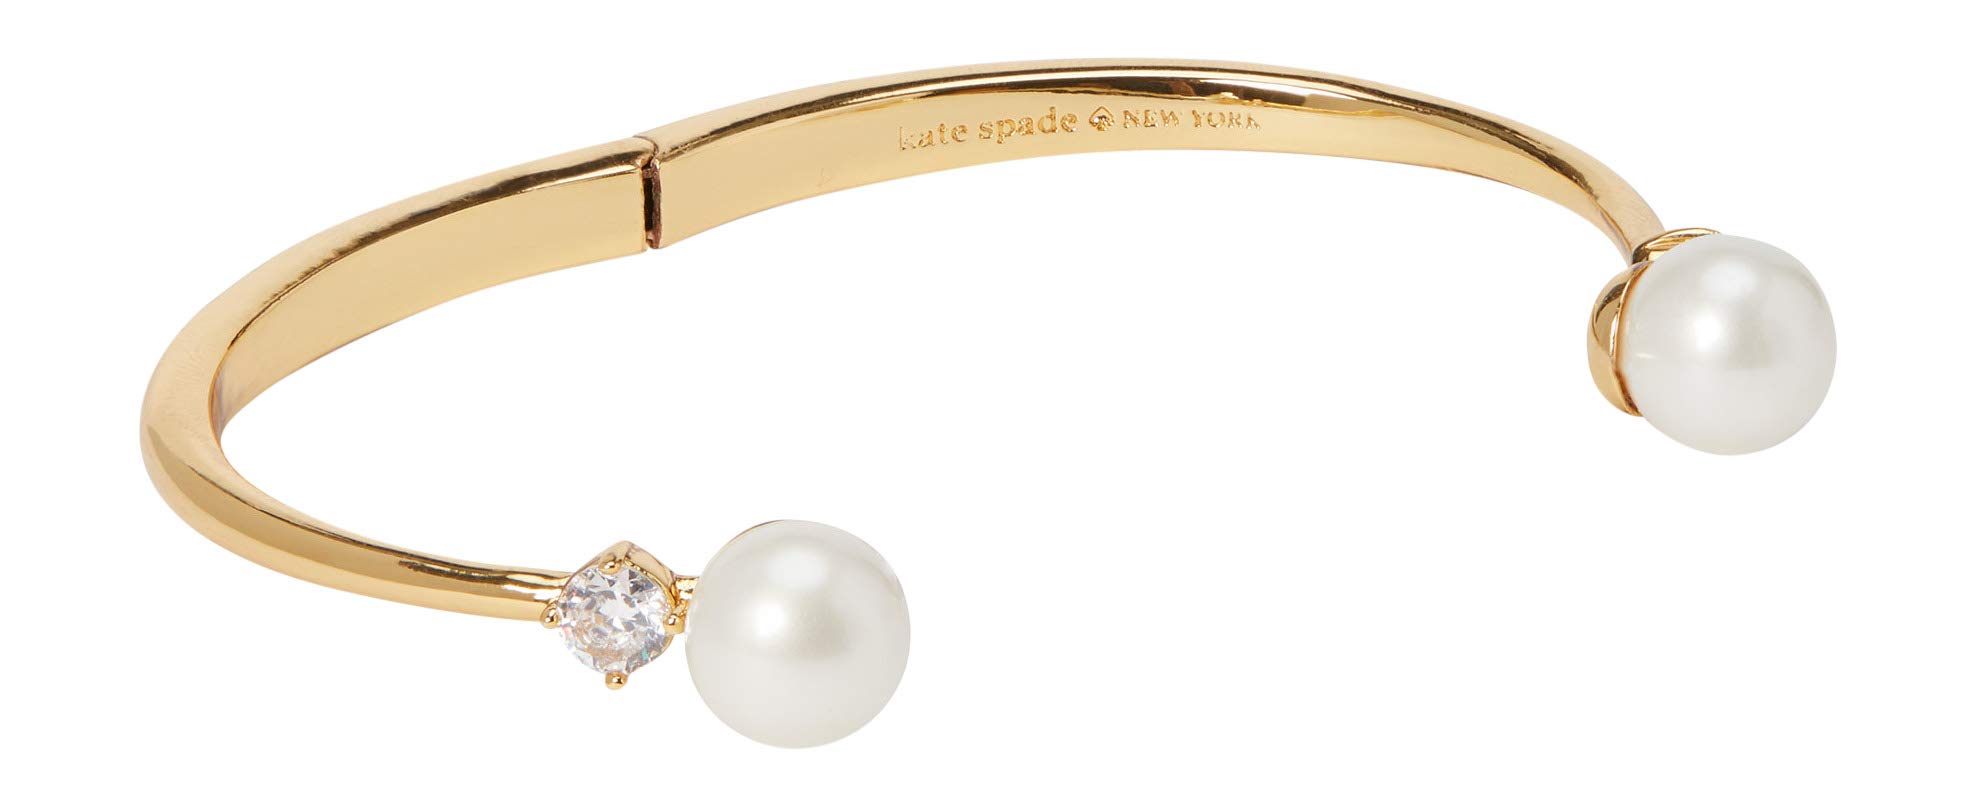 Kate Spade Pearls of Wisdom Open Hinged Bangle Bracelet